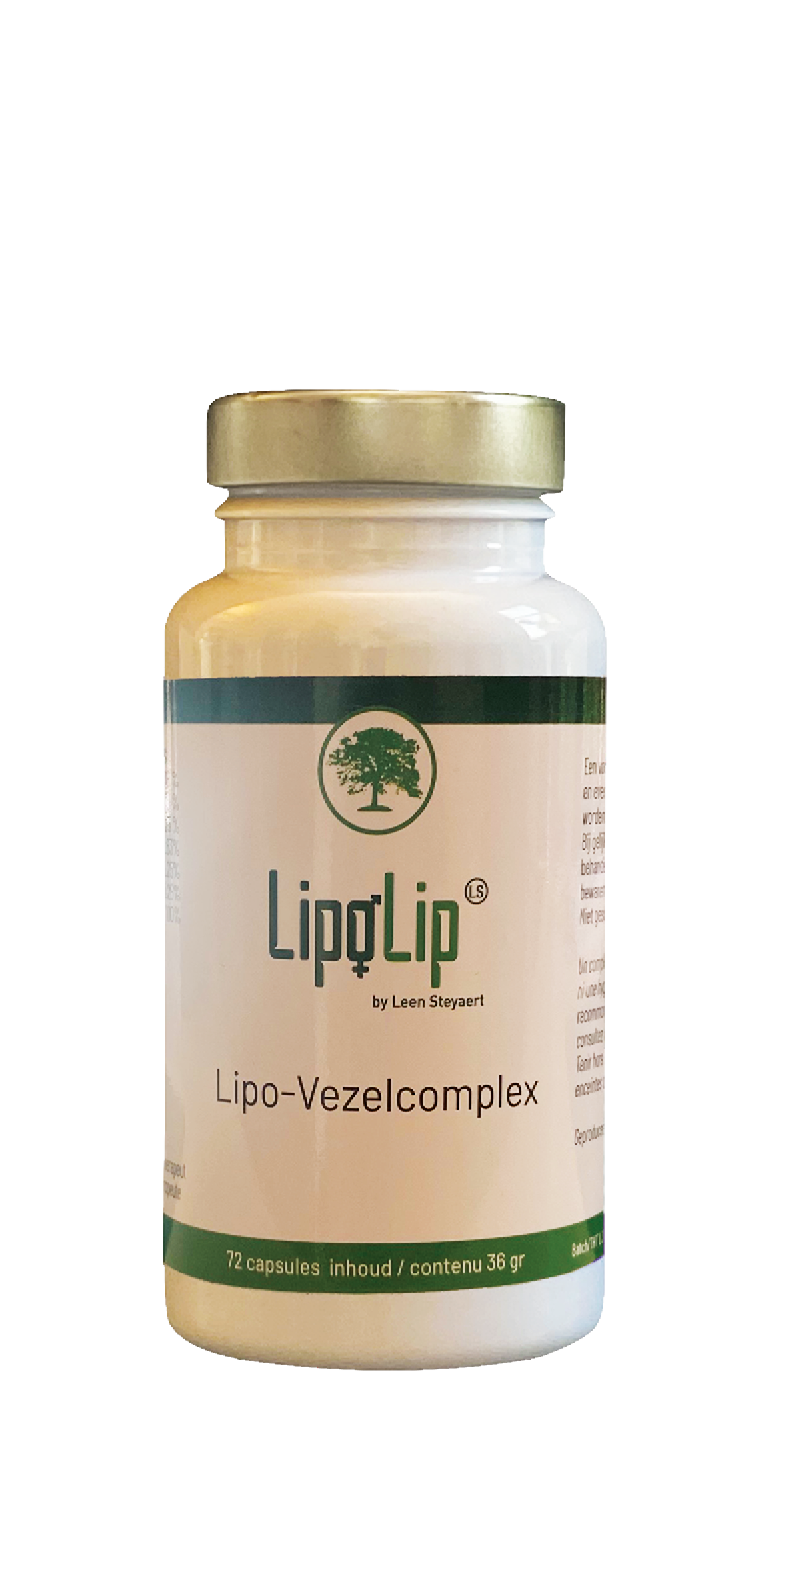 Lipolip - Vezelcomplex - 72 caps